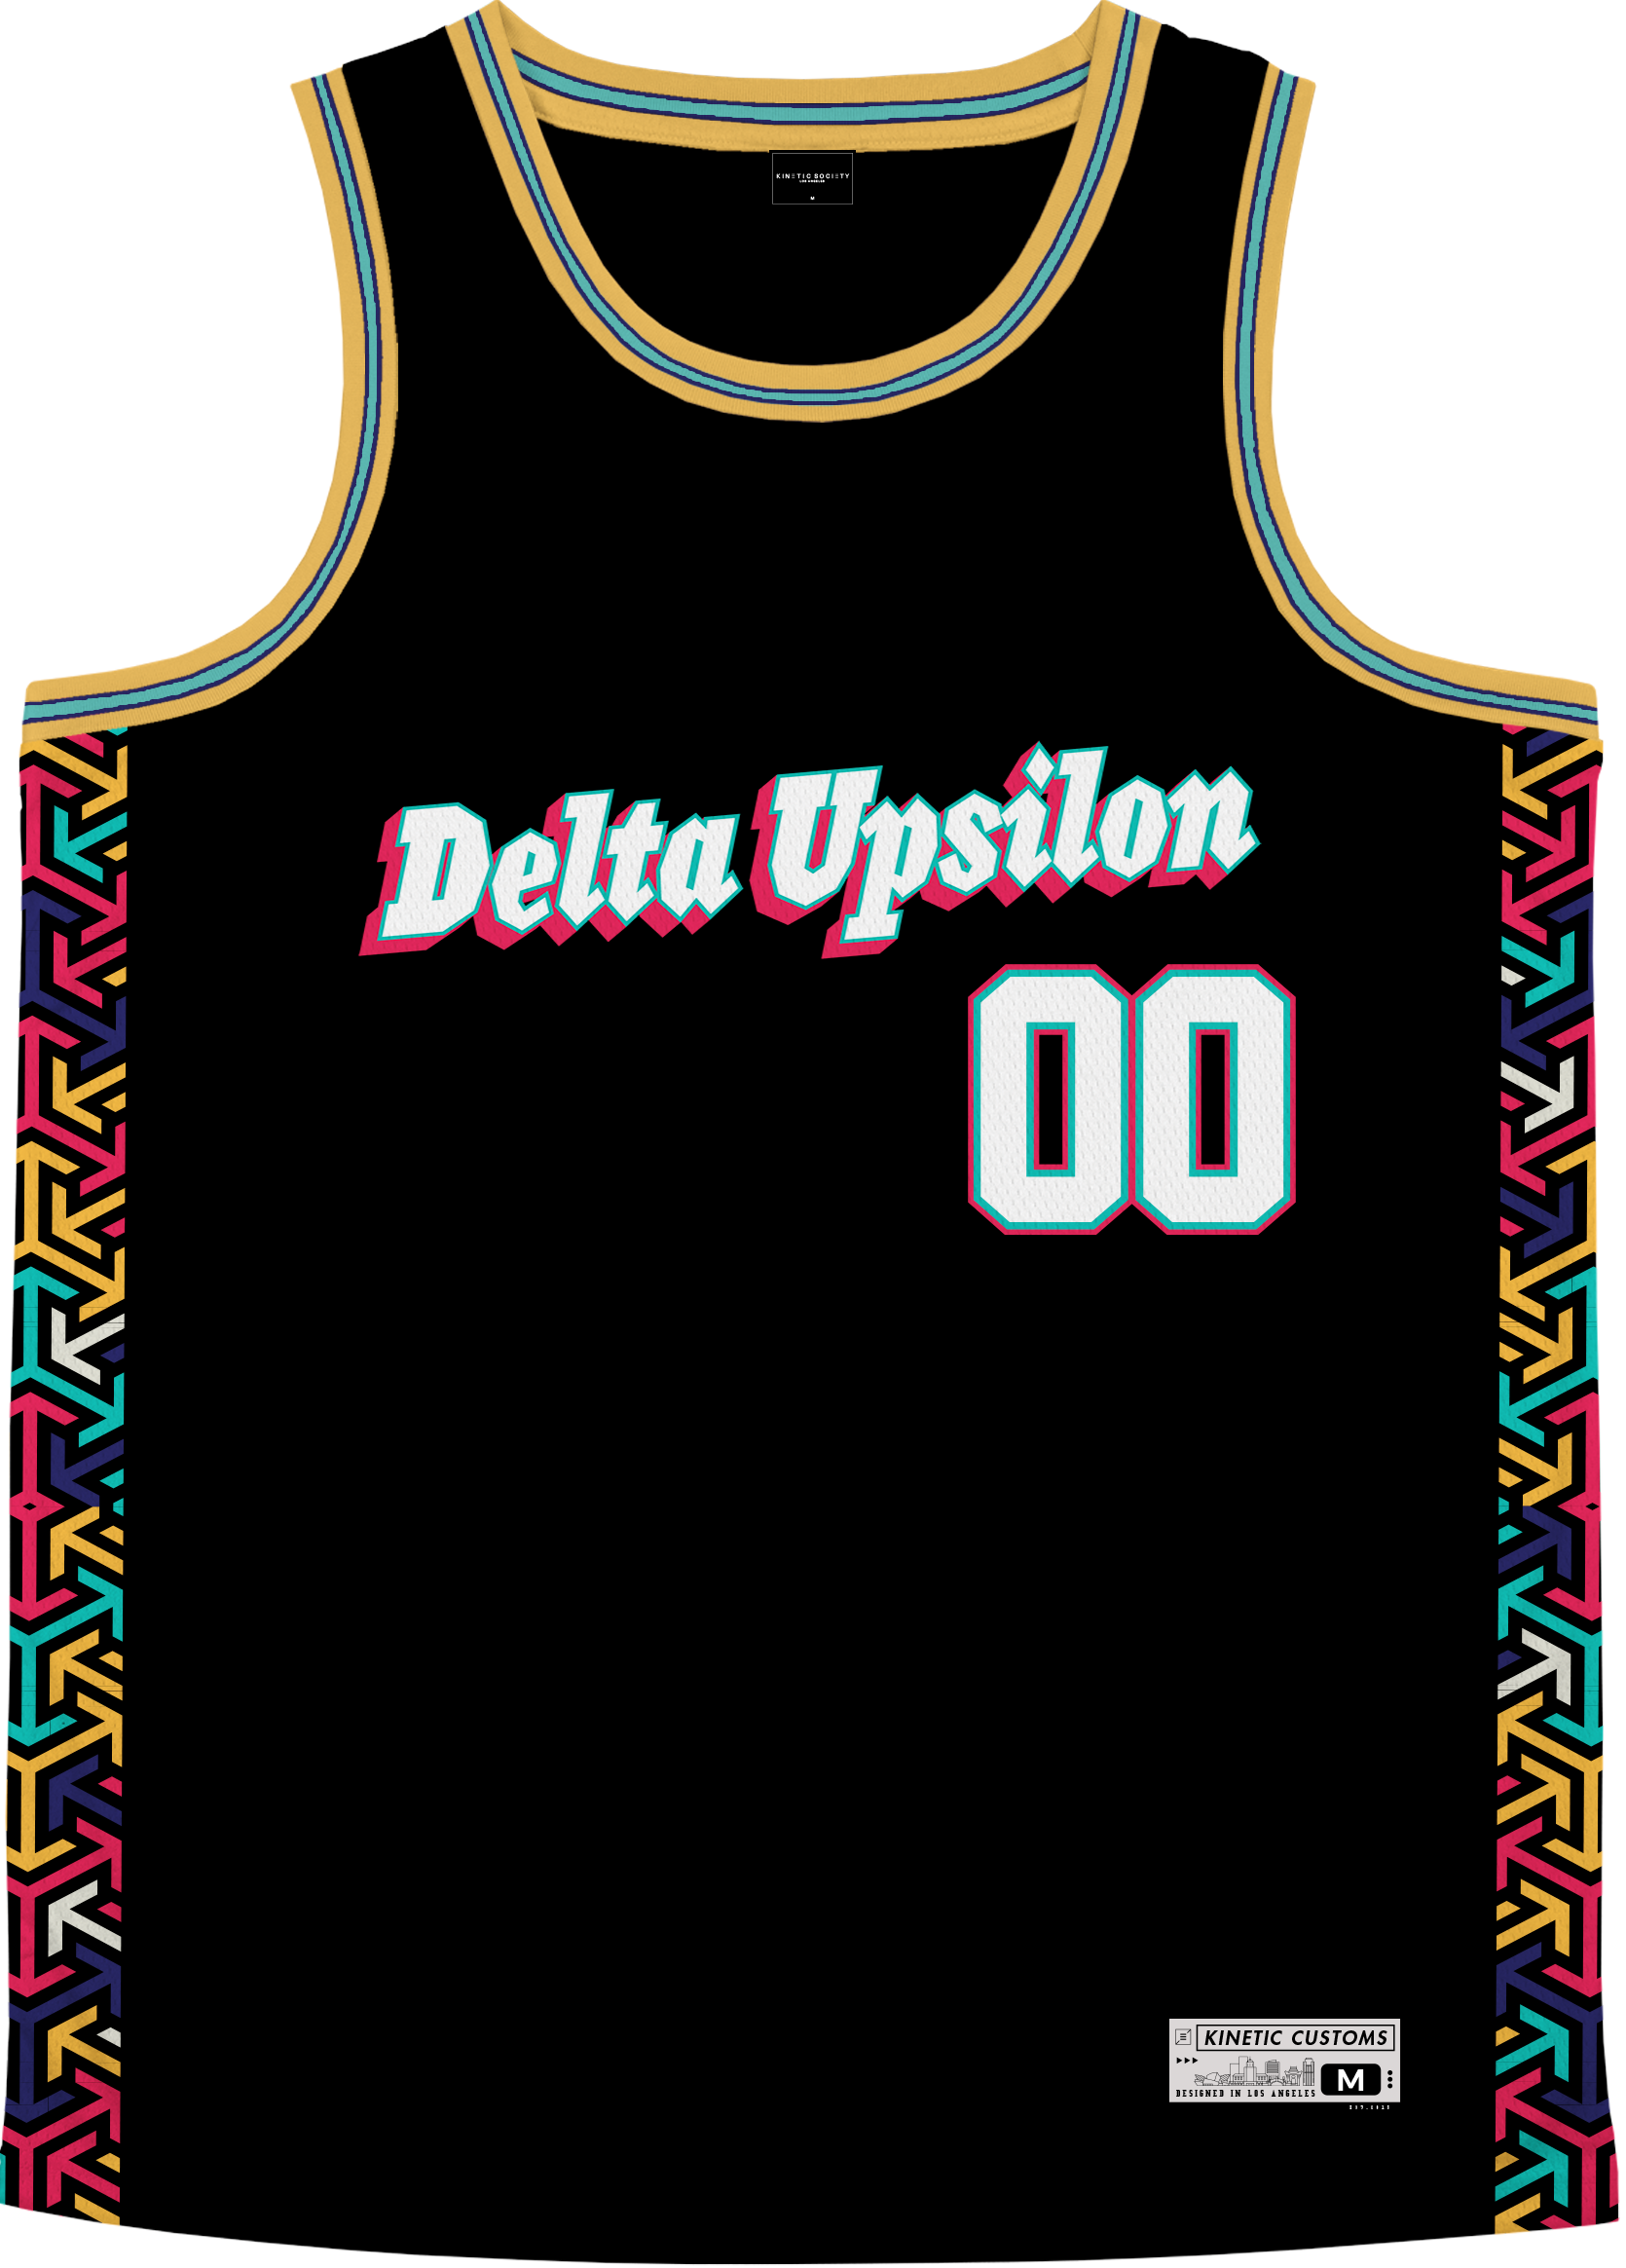 DELTA UPSILON - Cubic Arrows Basketball Jersey